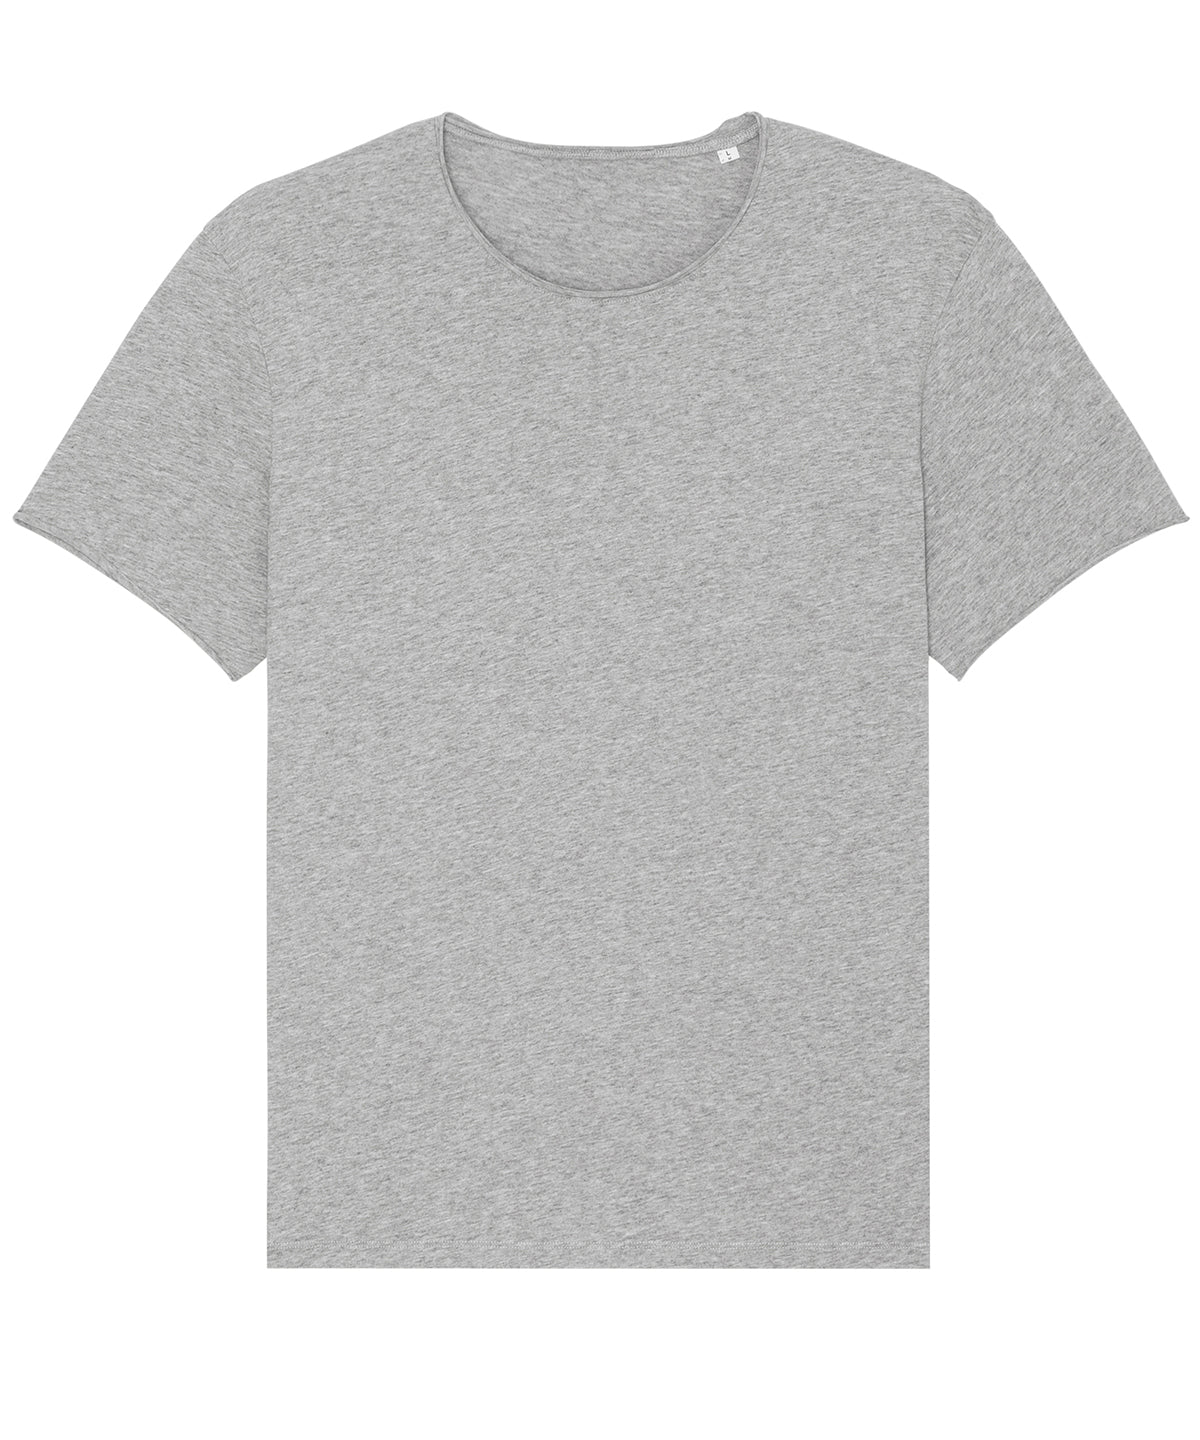 Imaginer, The unisex raw edge t-shirt